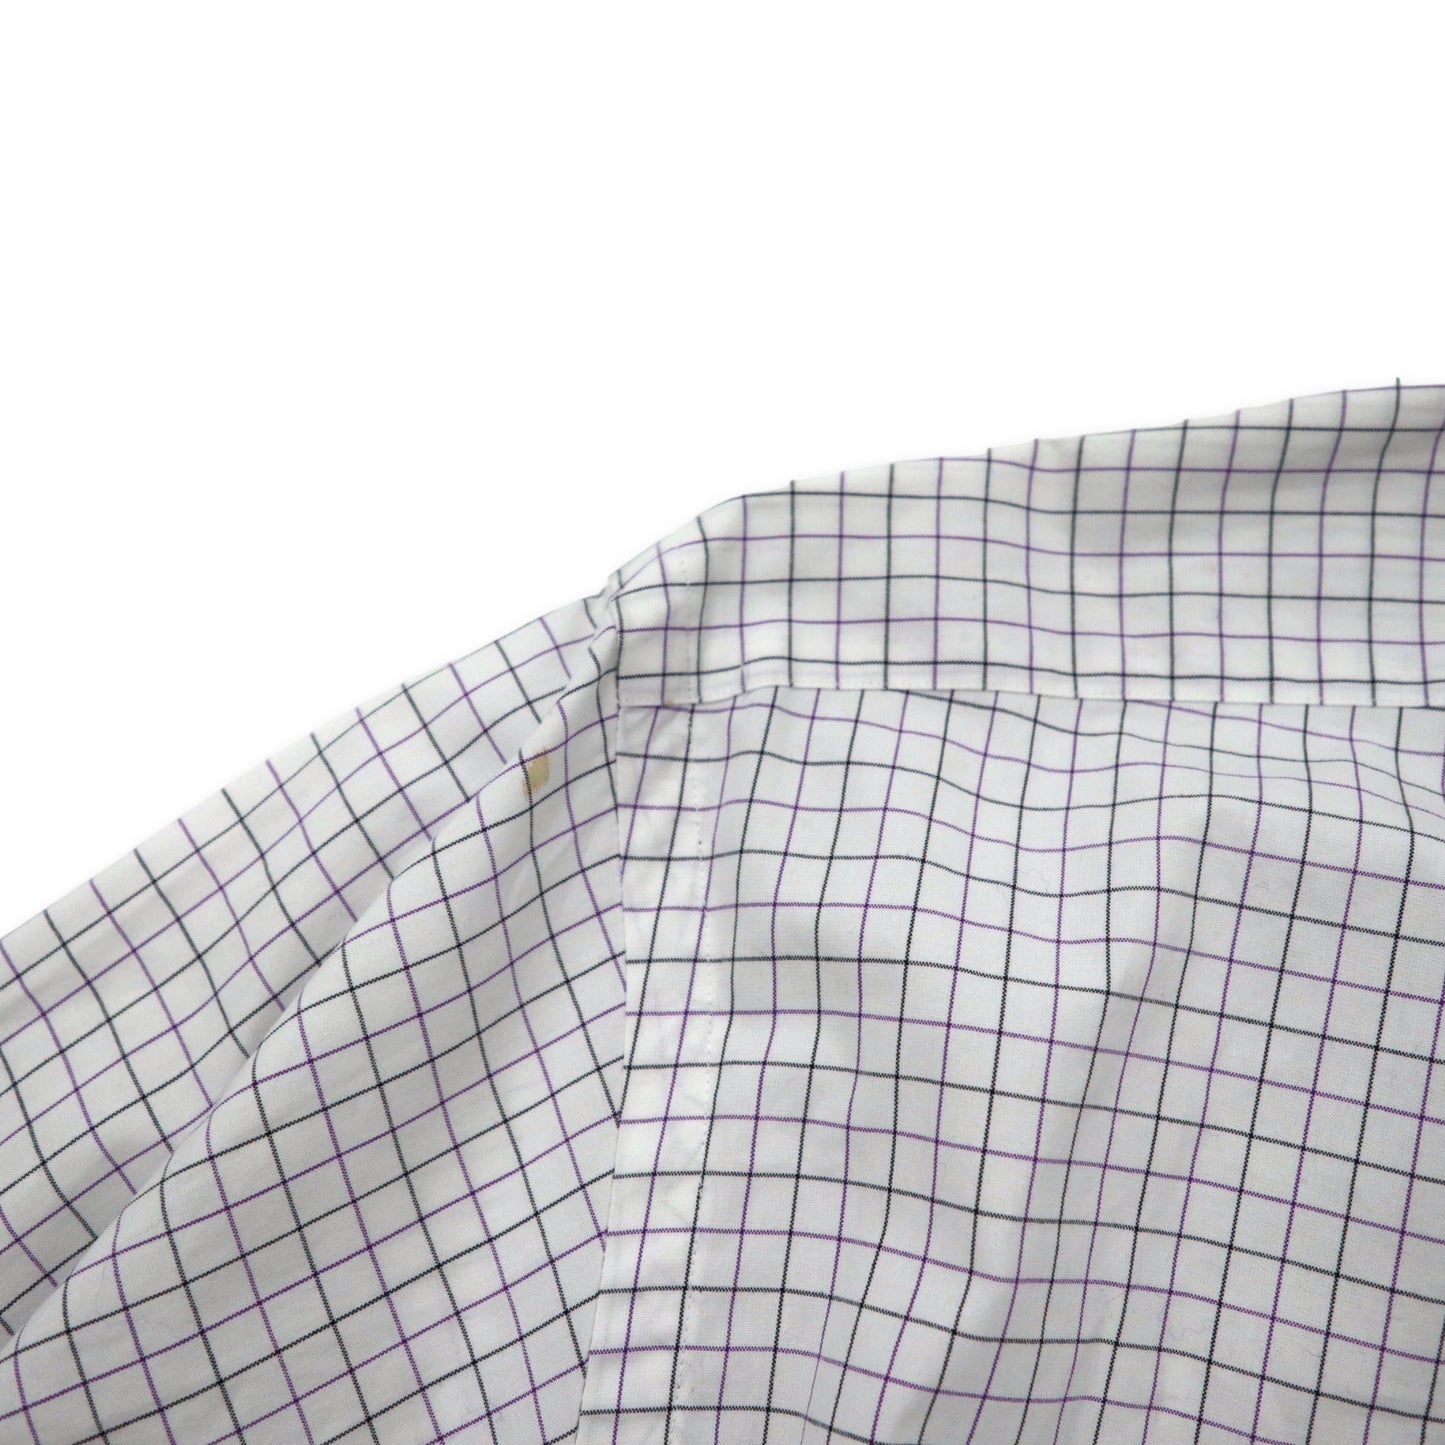 RALPH LAUREN ボタンダウンシャツ 39-82 ホワイト チェック コットン スモールポニー刺繍